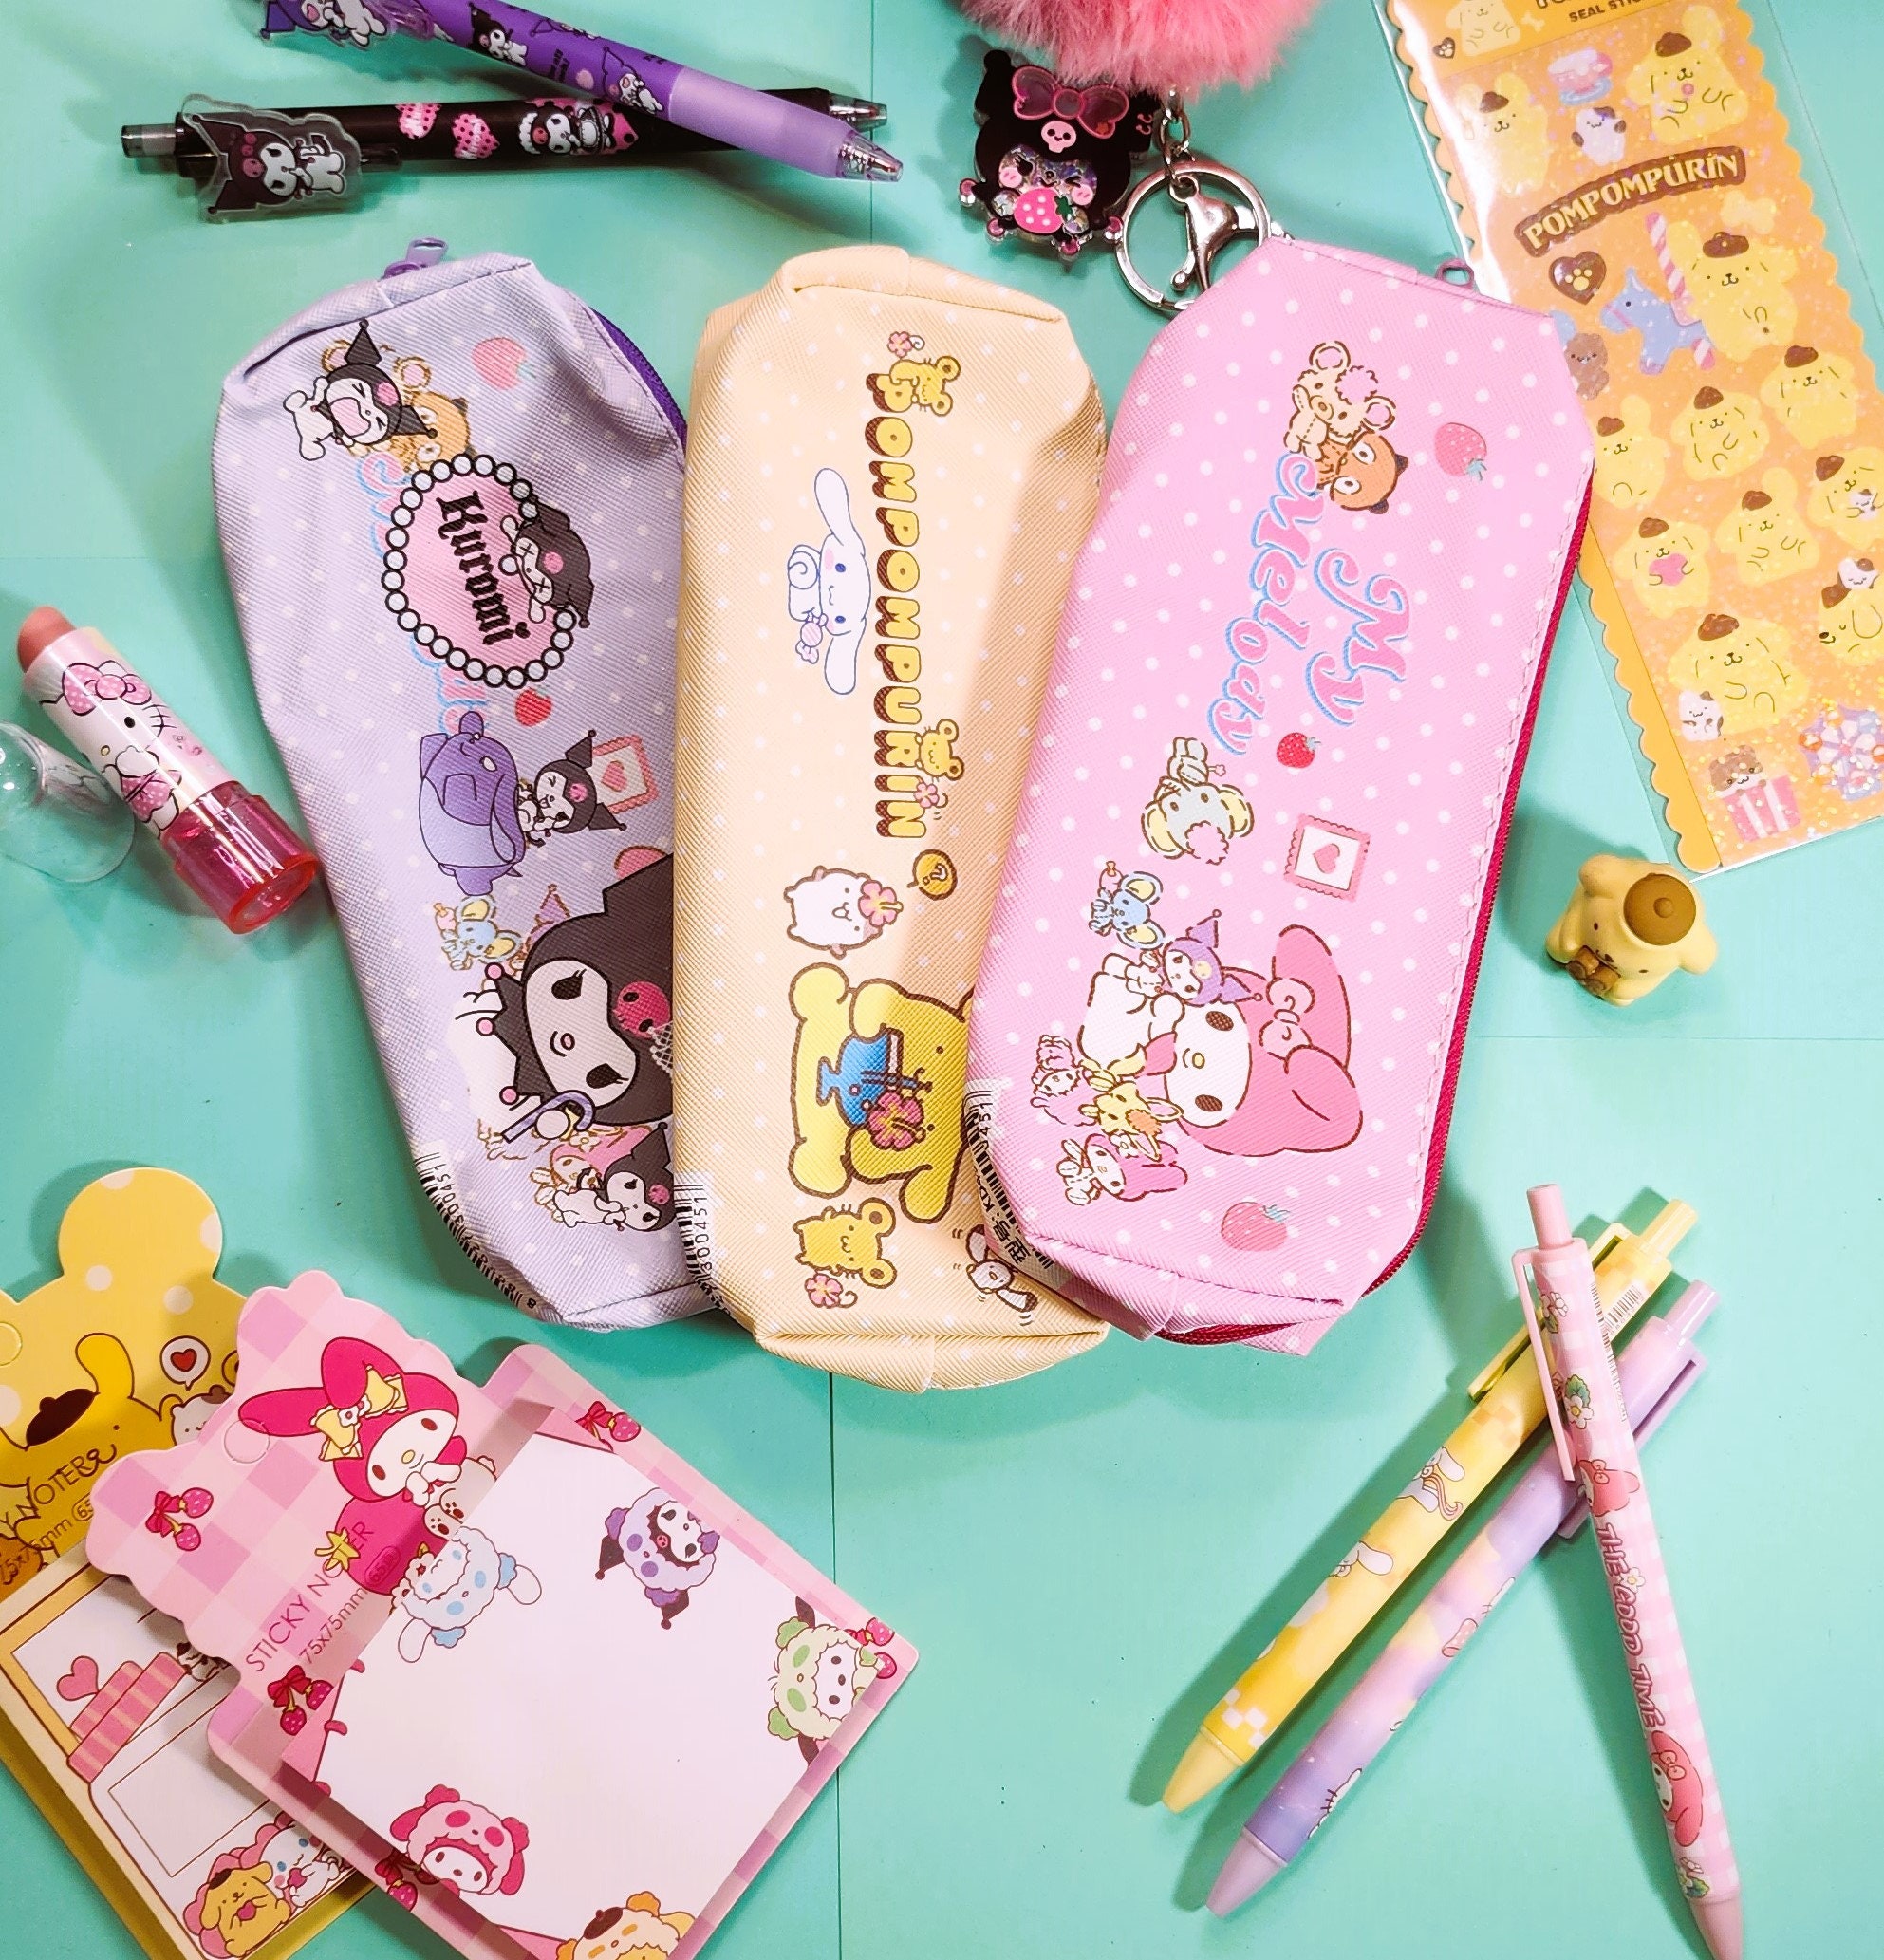 Quilted Pencil Case, Slim Pencil Case, Floral Pencil Case, Pencil  Organizer, Handmade Zipper Boxy Brush Bag 